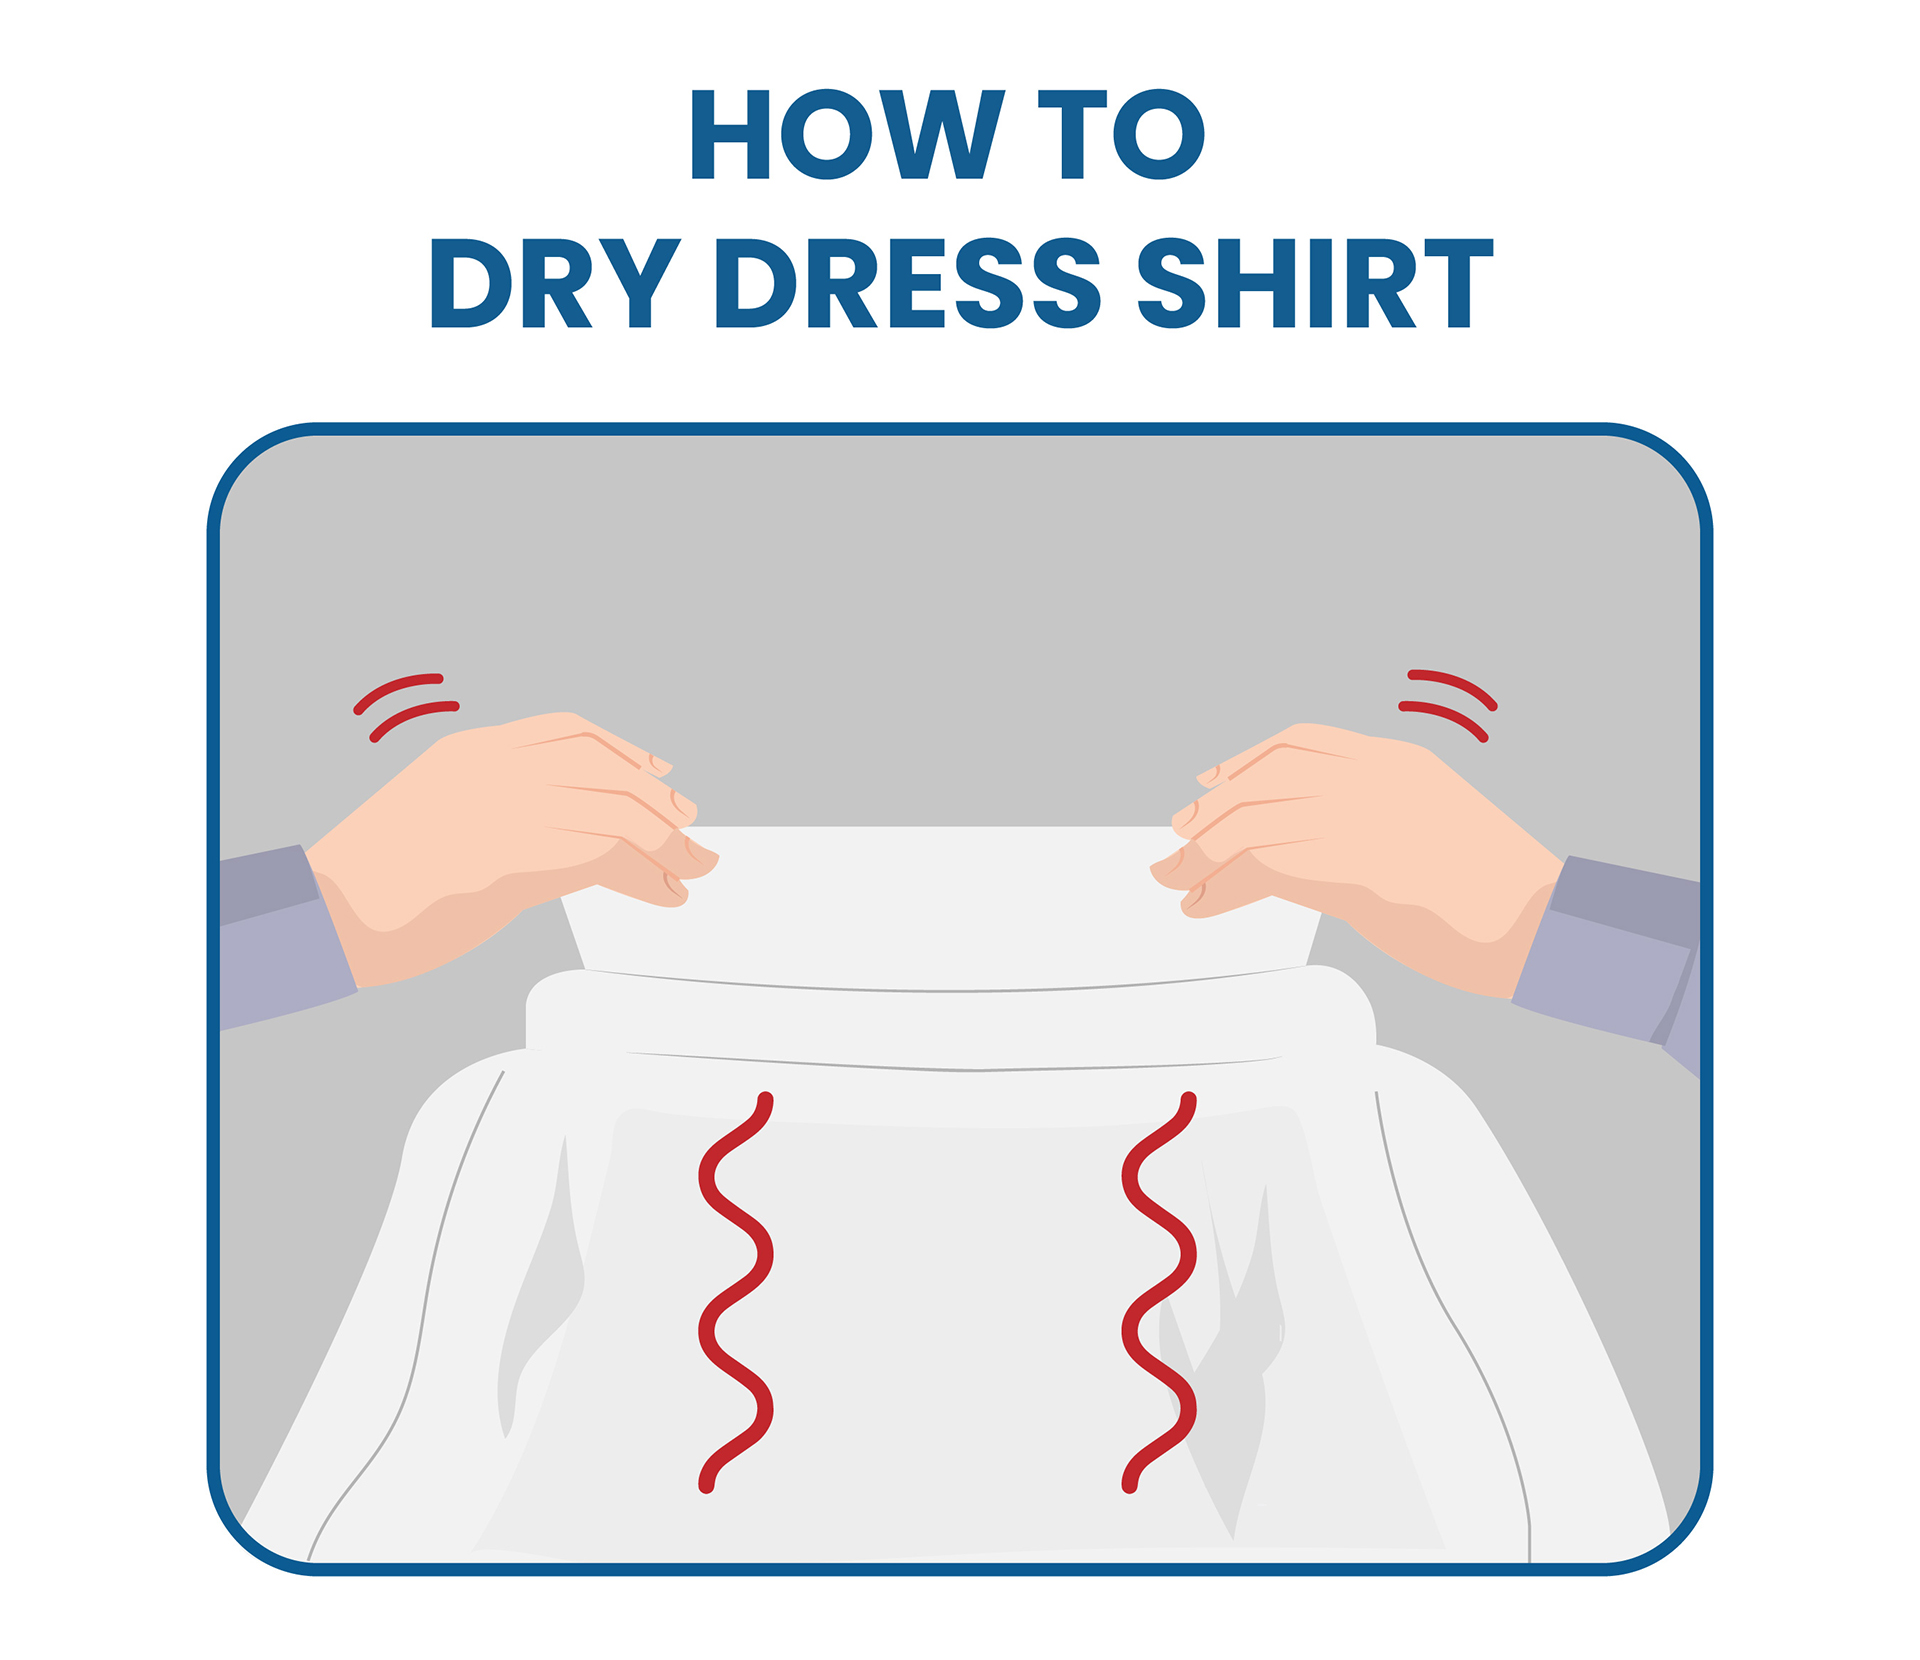 dry dress shirt after washing